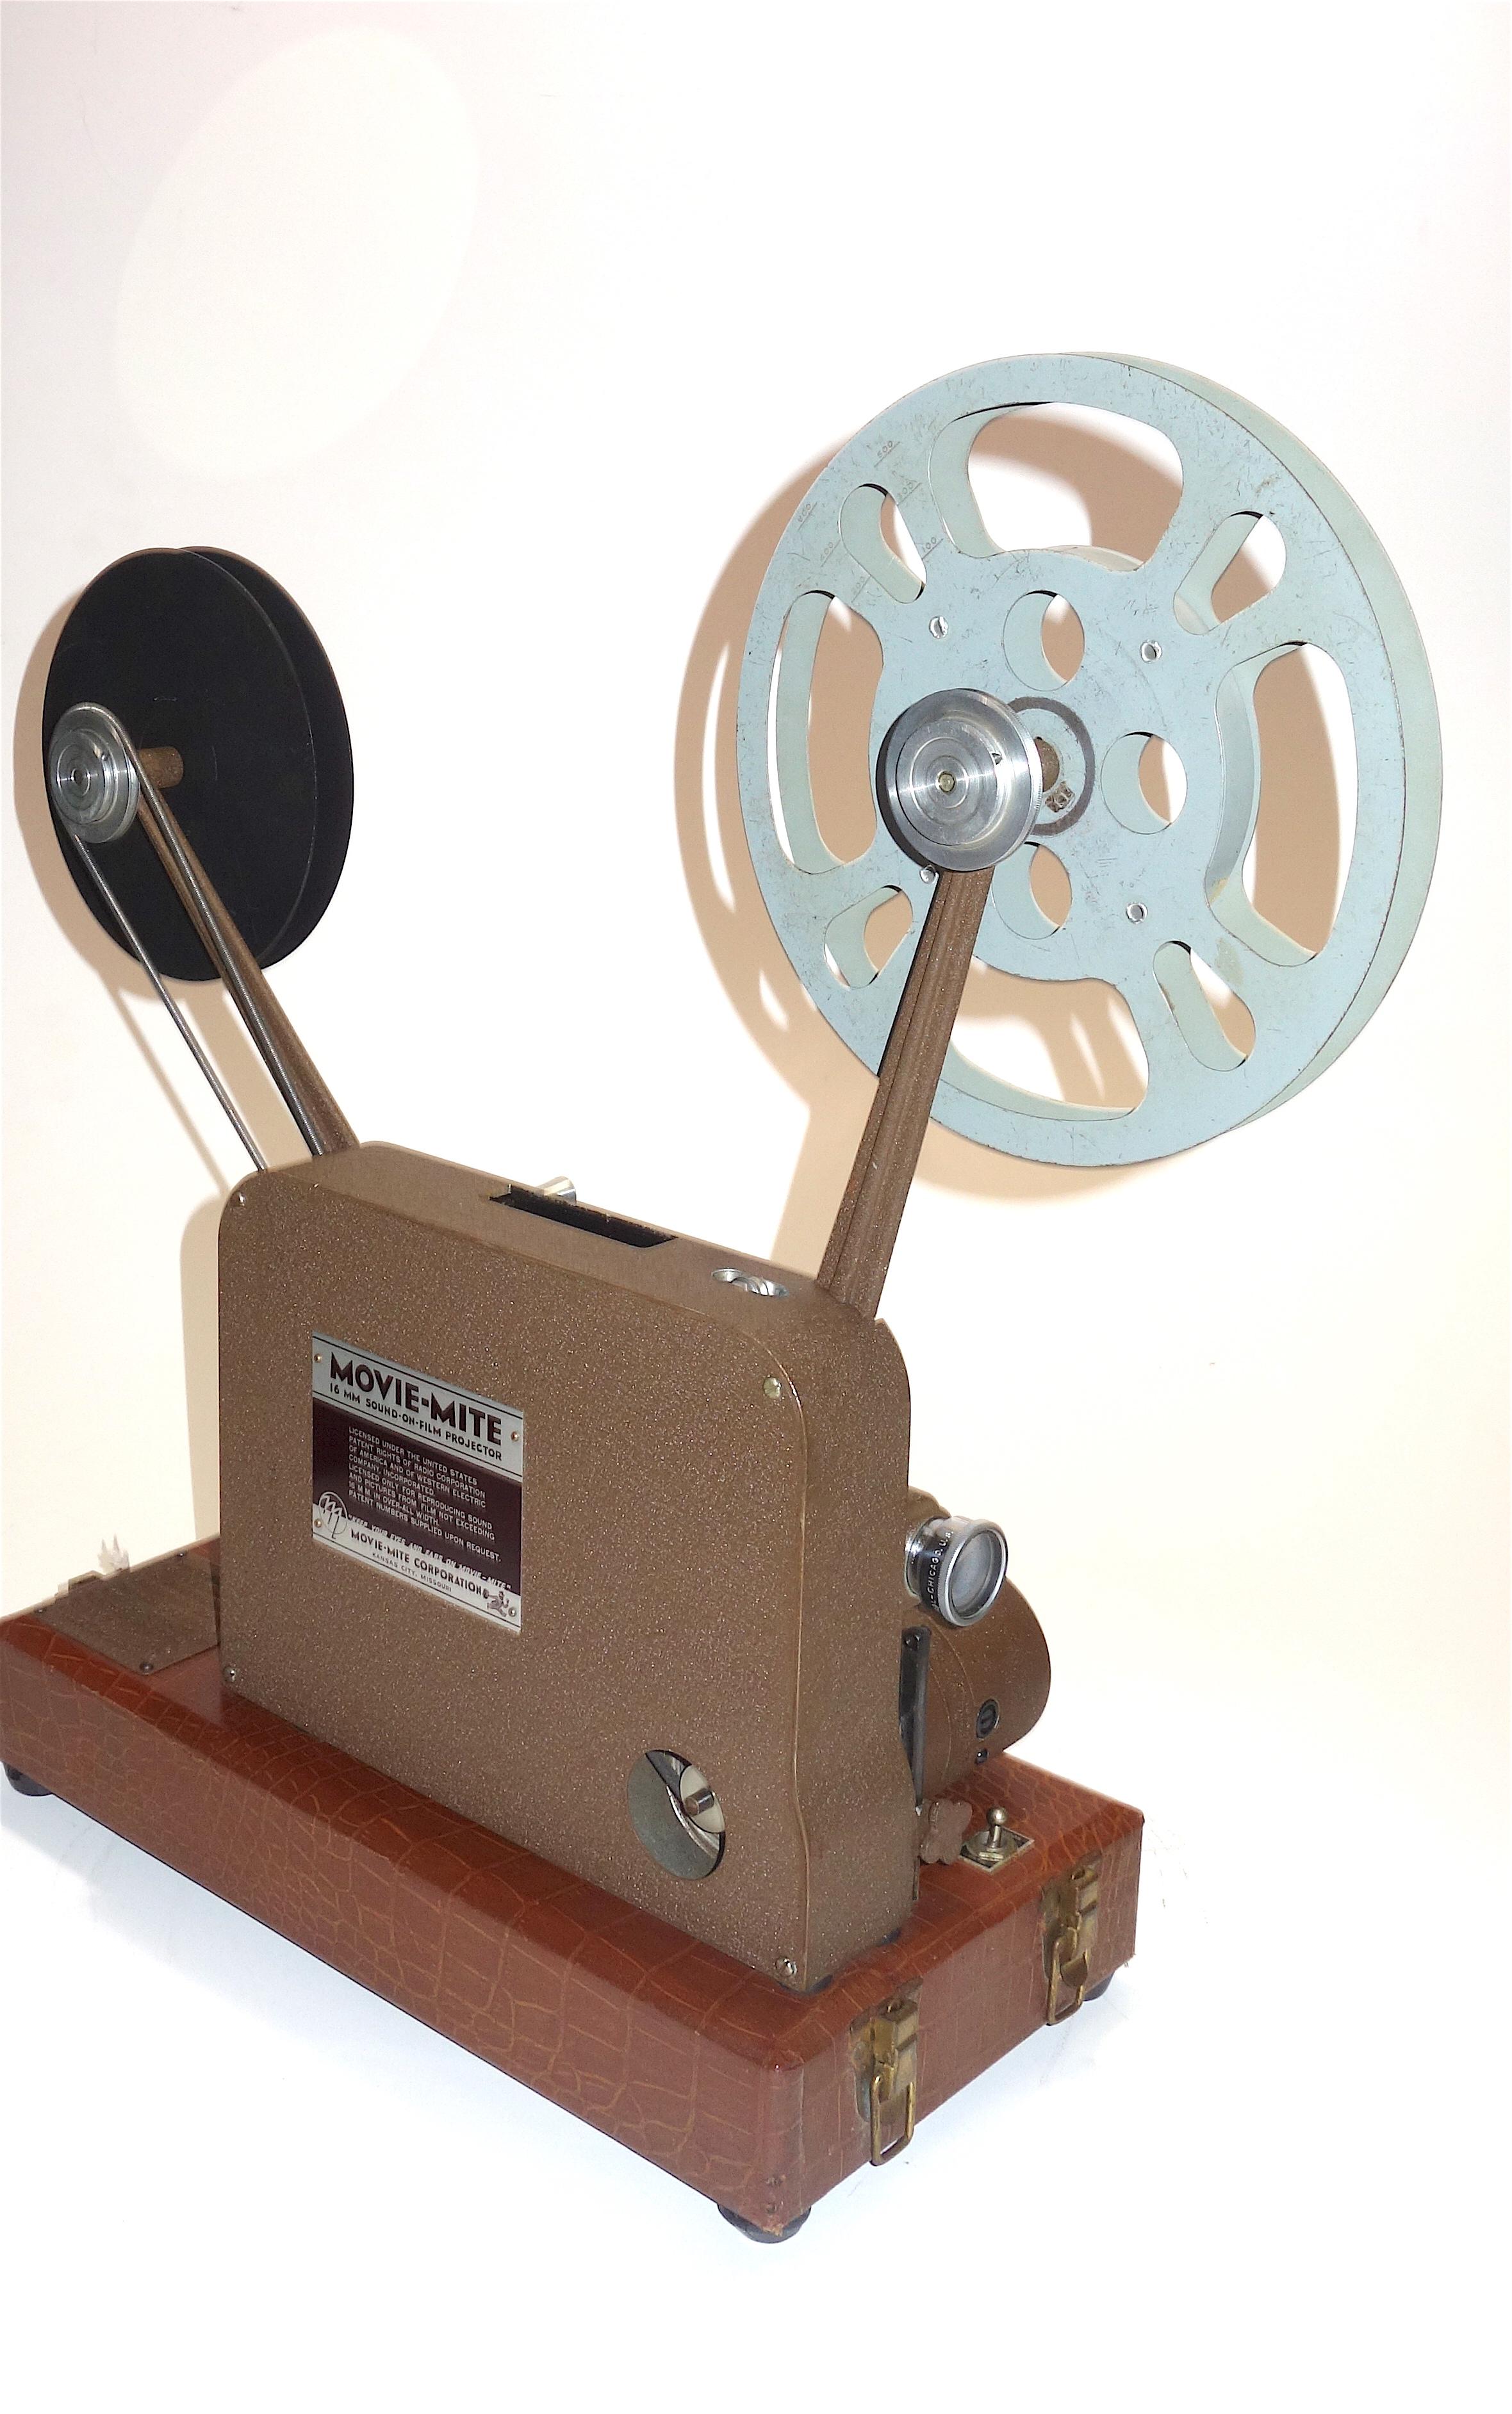 Sound and Picture Movie Projector Art Deco Design All Original 16mm, circa 1940s For Sale 1